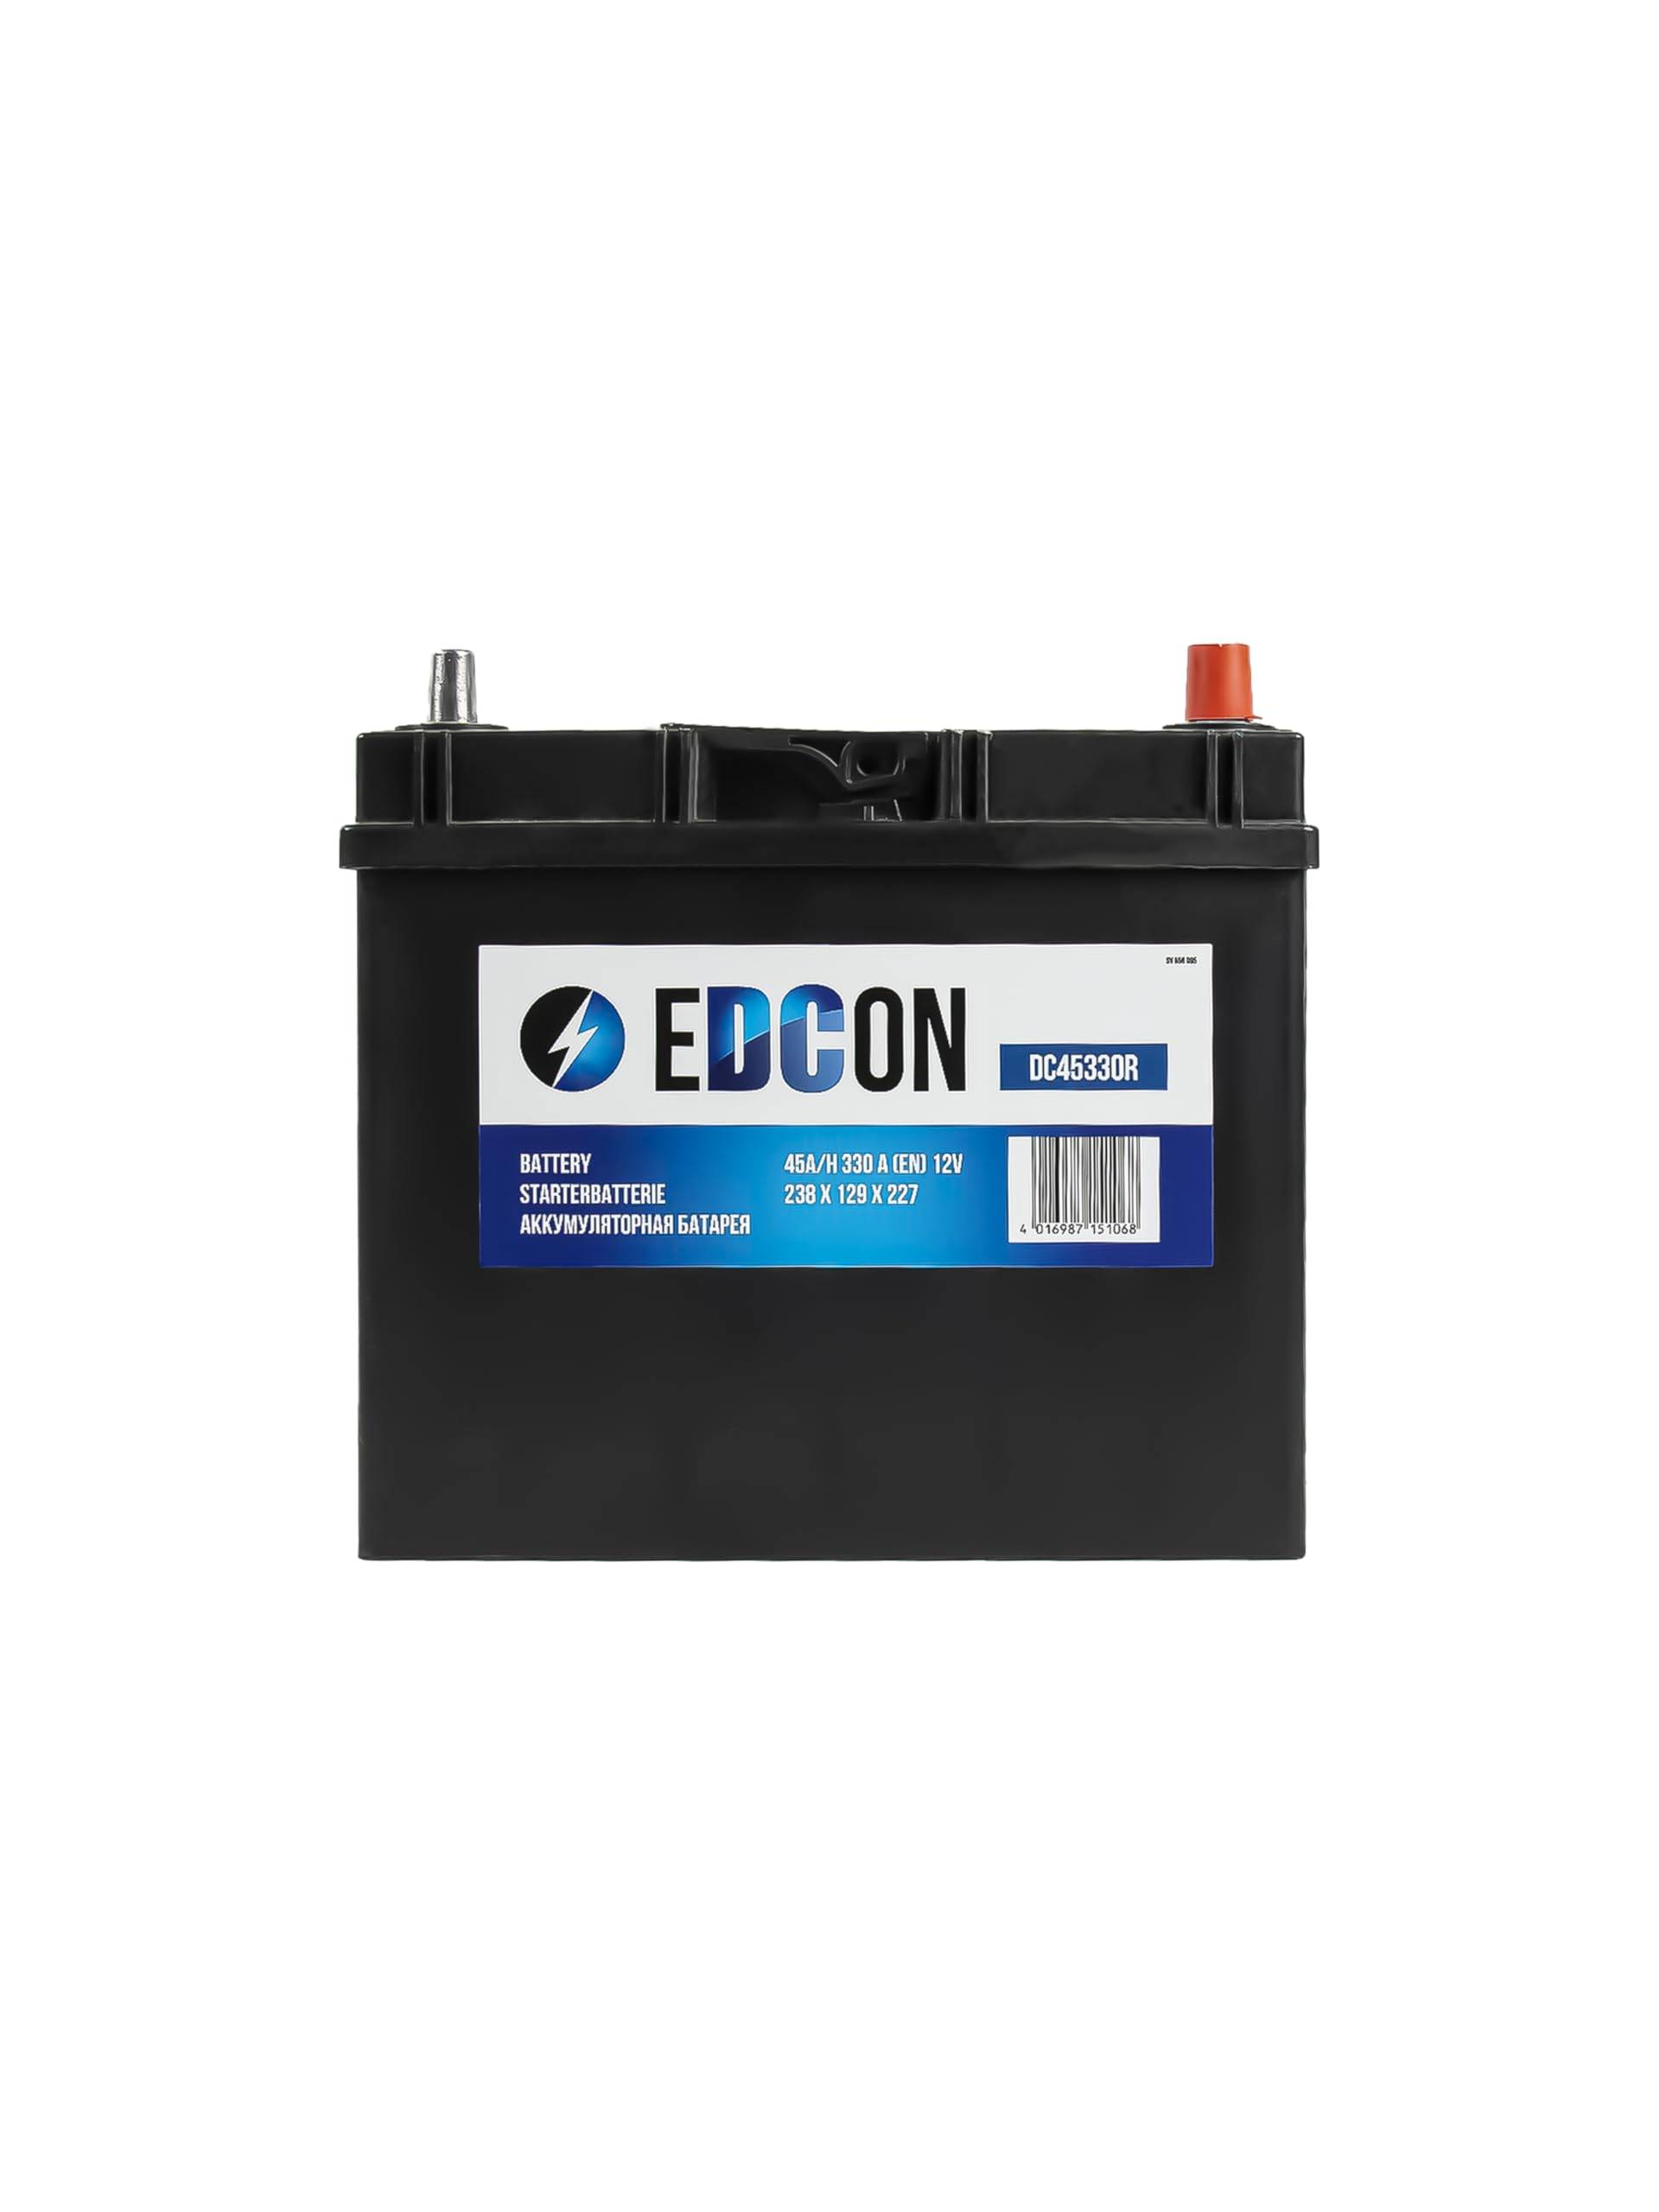 EDCON DC45330R Autobatterie 12V – 45Ah – 330A – Starterbatterie – Bleisäure Ca/Ca Technologie von EDCON